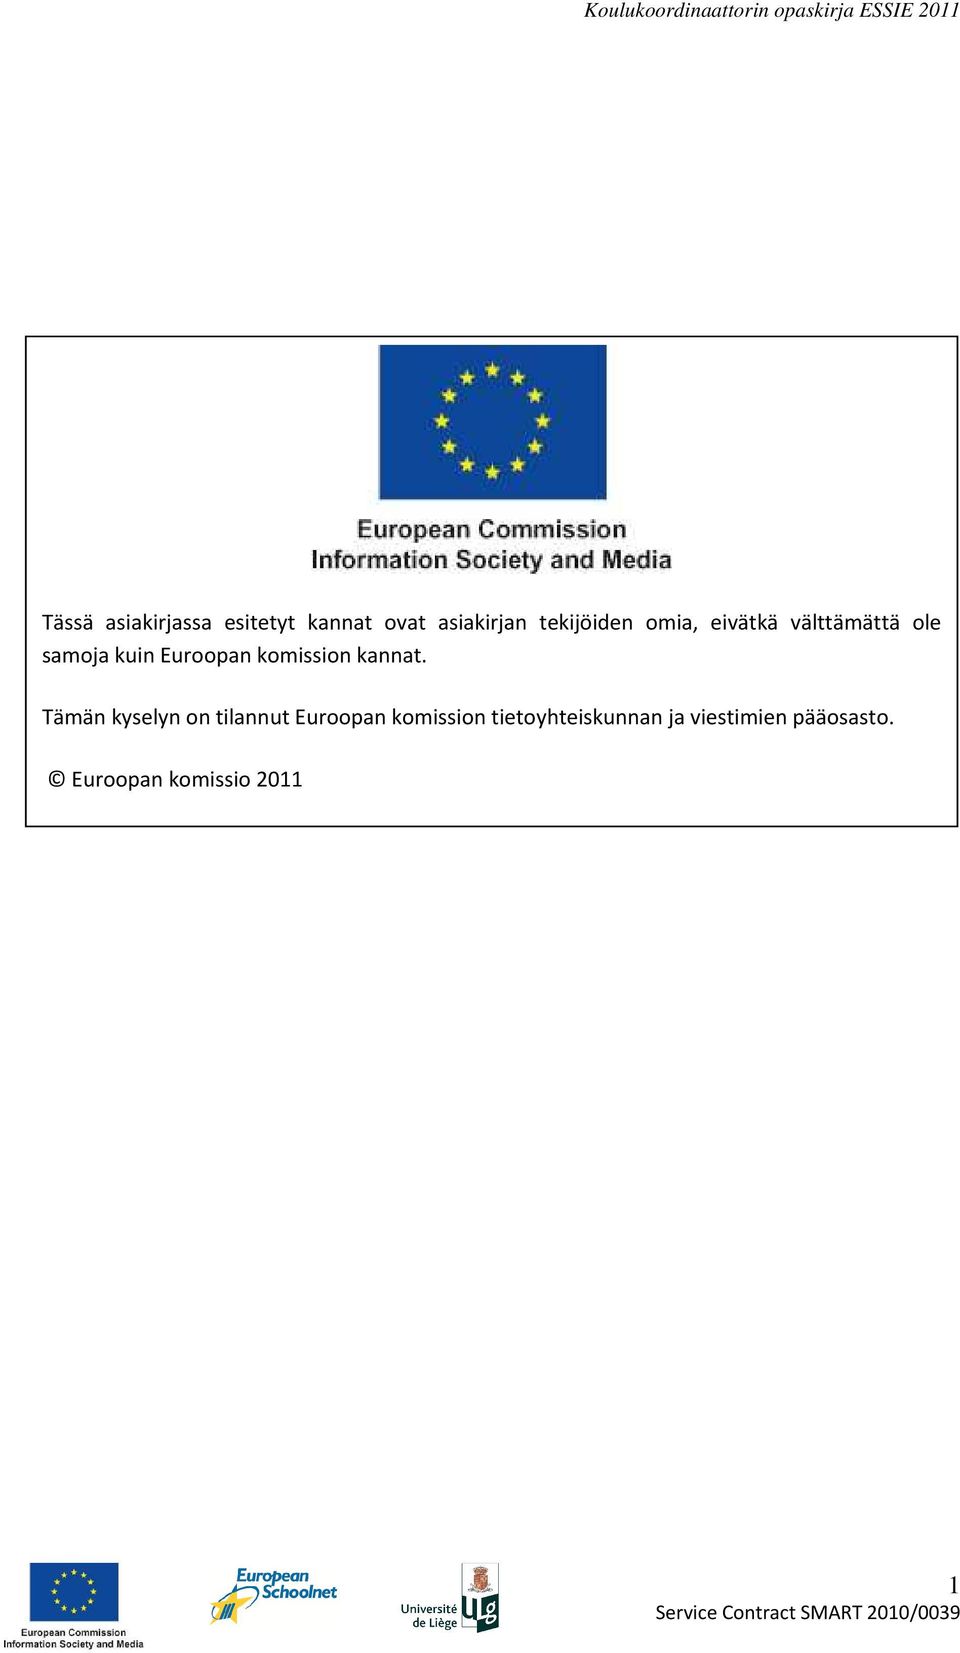 Euroopan komission kannat.